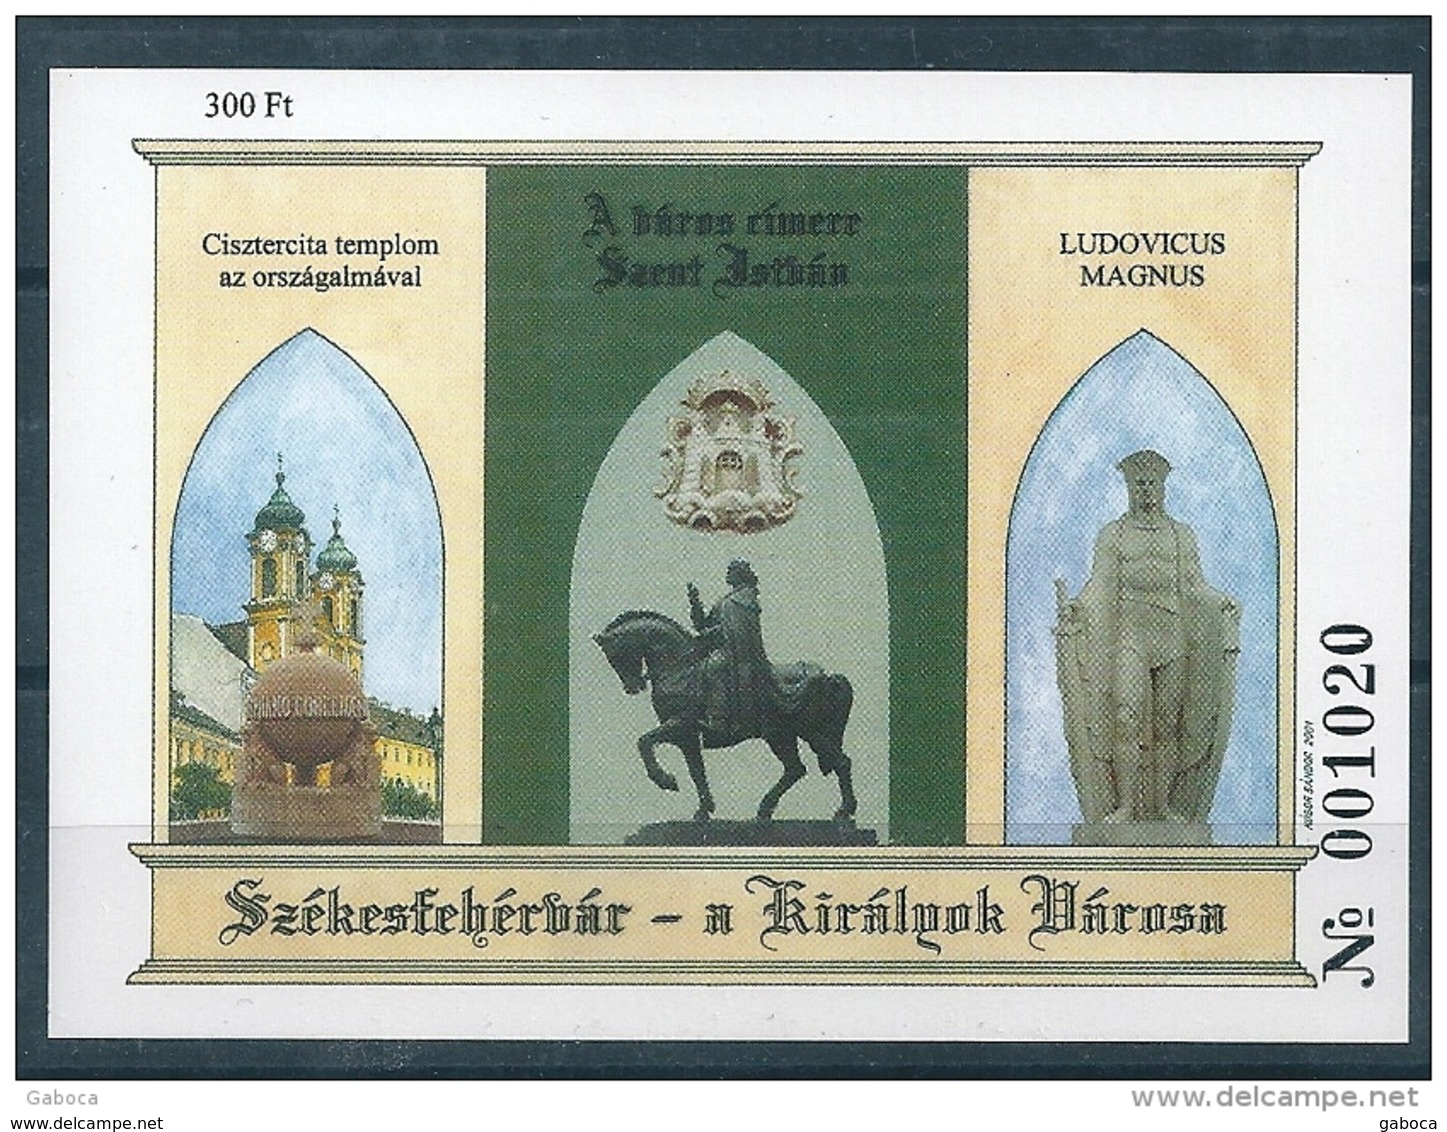 1370 Hungary 2001 Szekesfehervar City Of The Kings Memorial Sheet MNH - Herdenkingsblaadjes